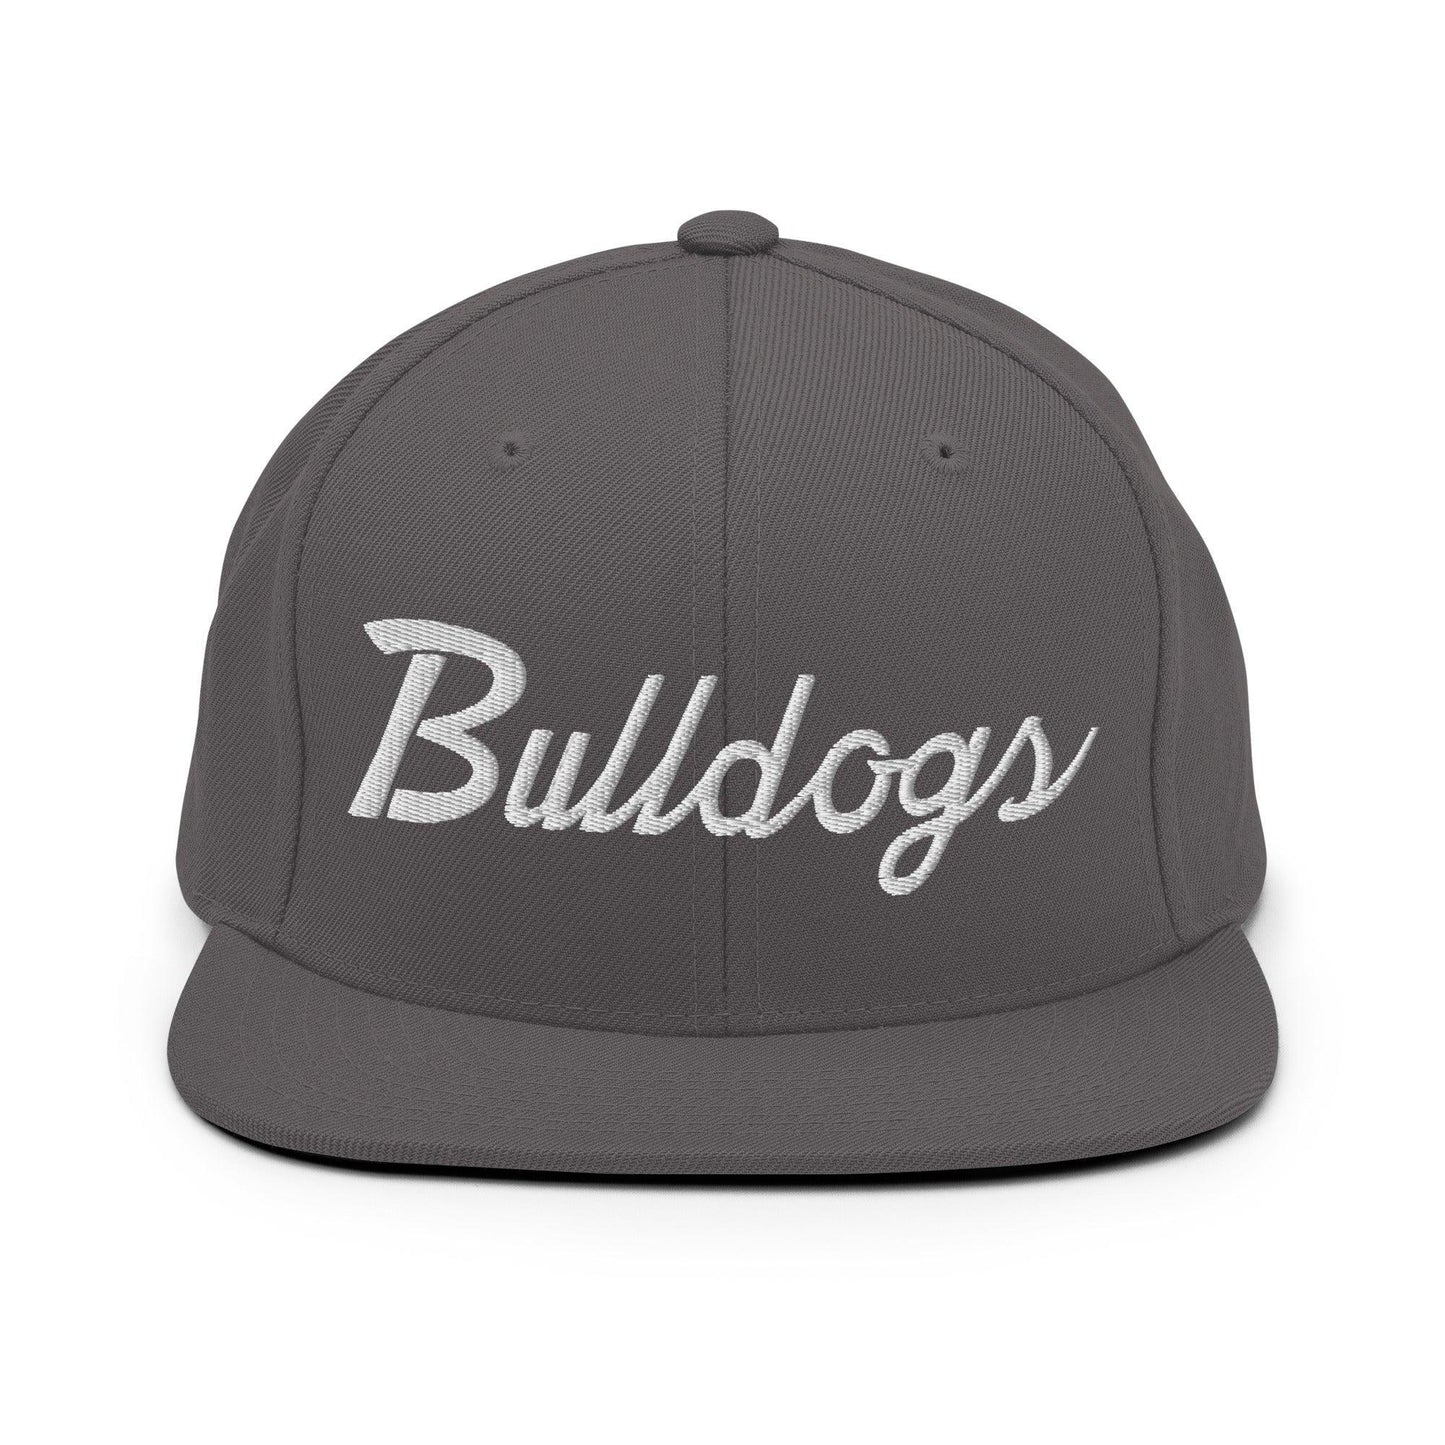 Bulldogs School Mascot Script Snapback Hat Dark Grey